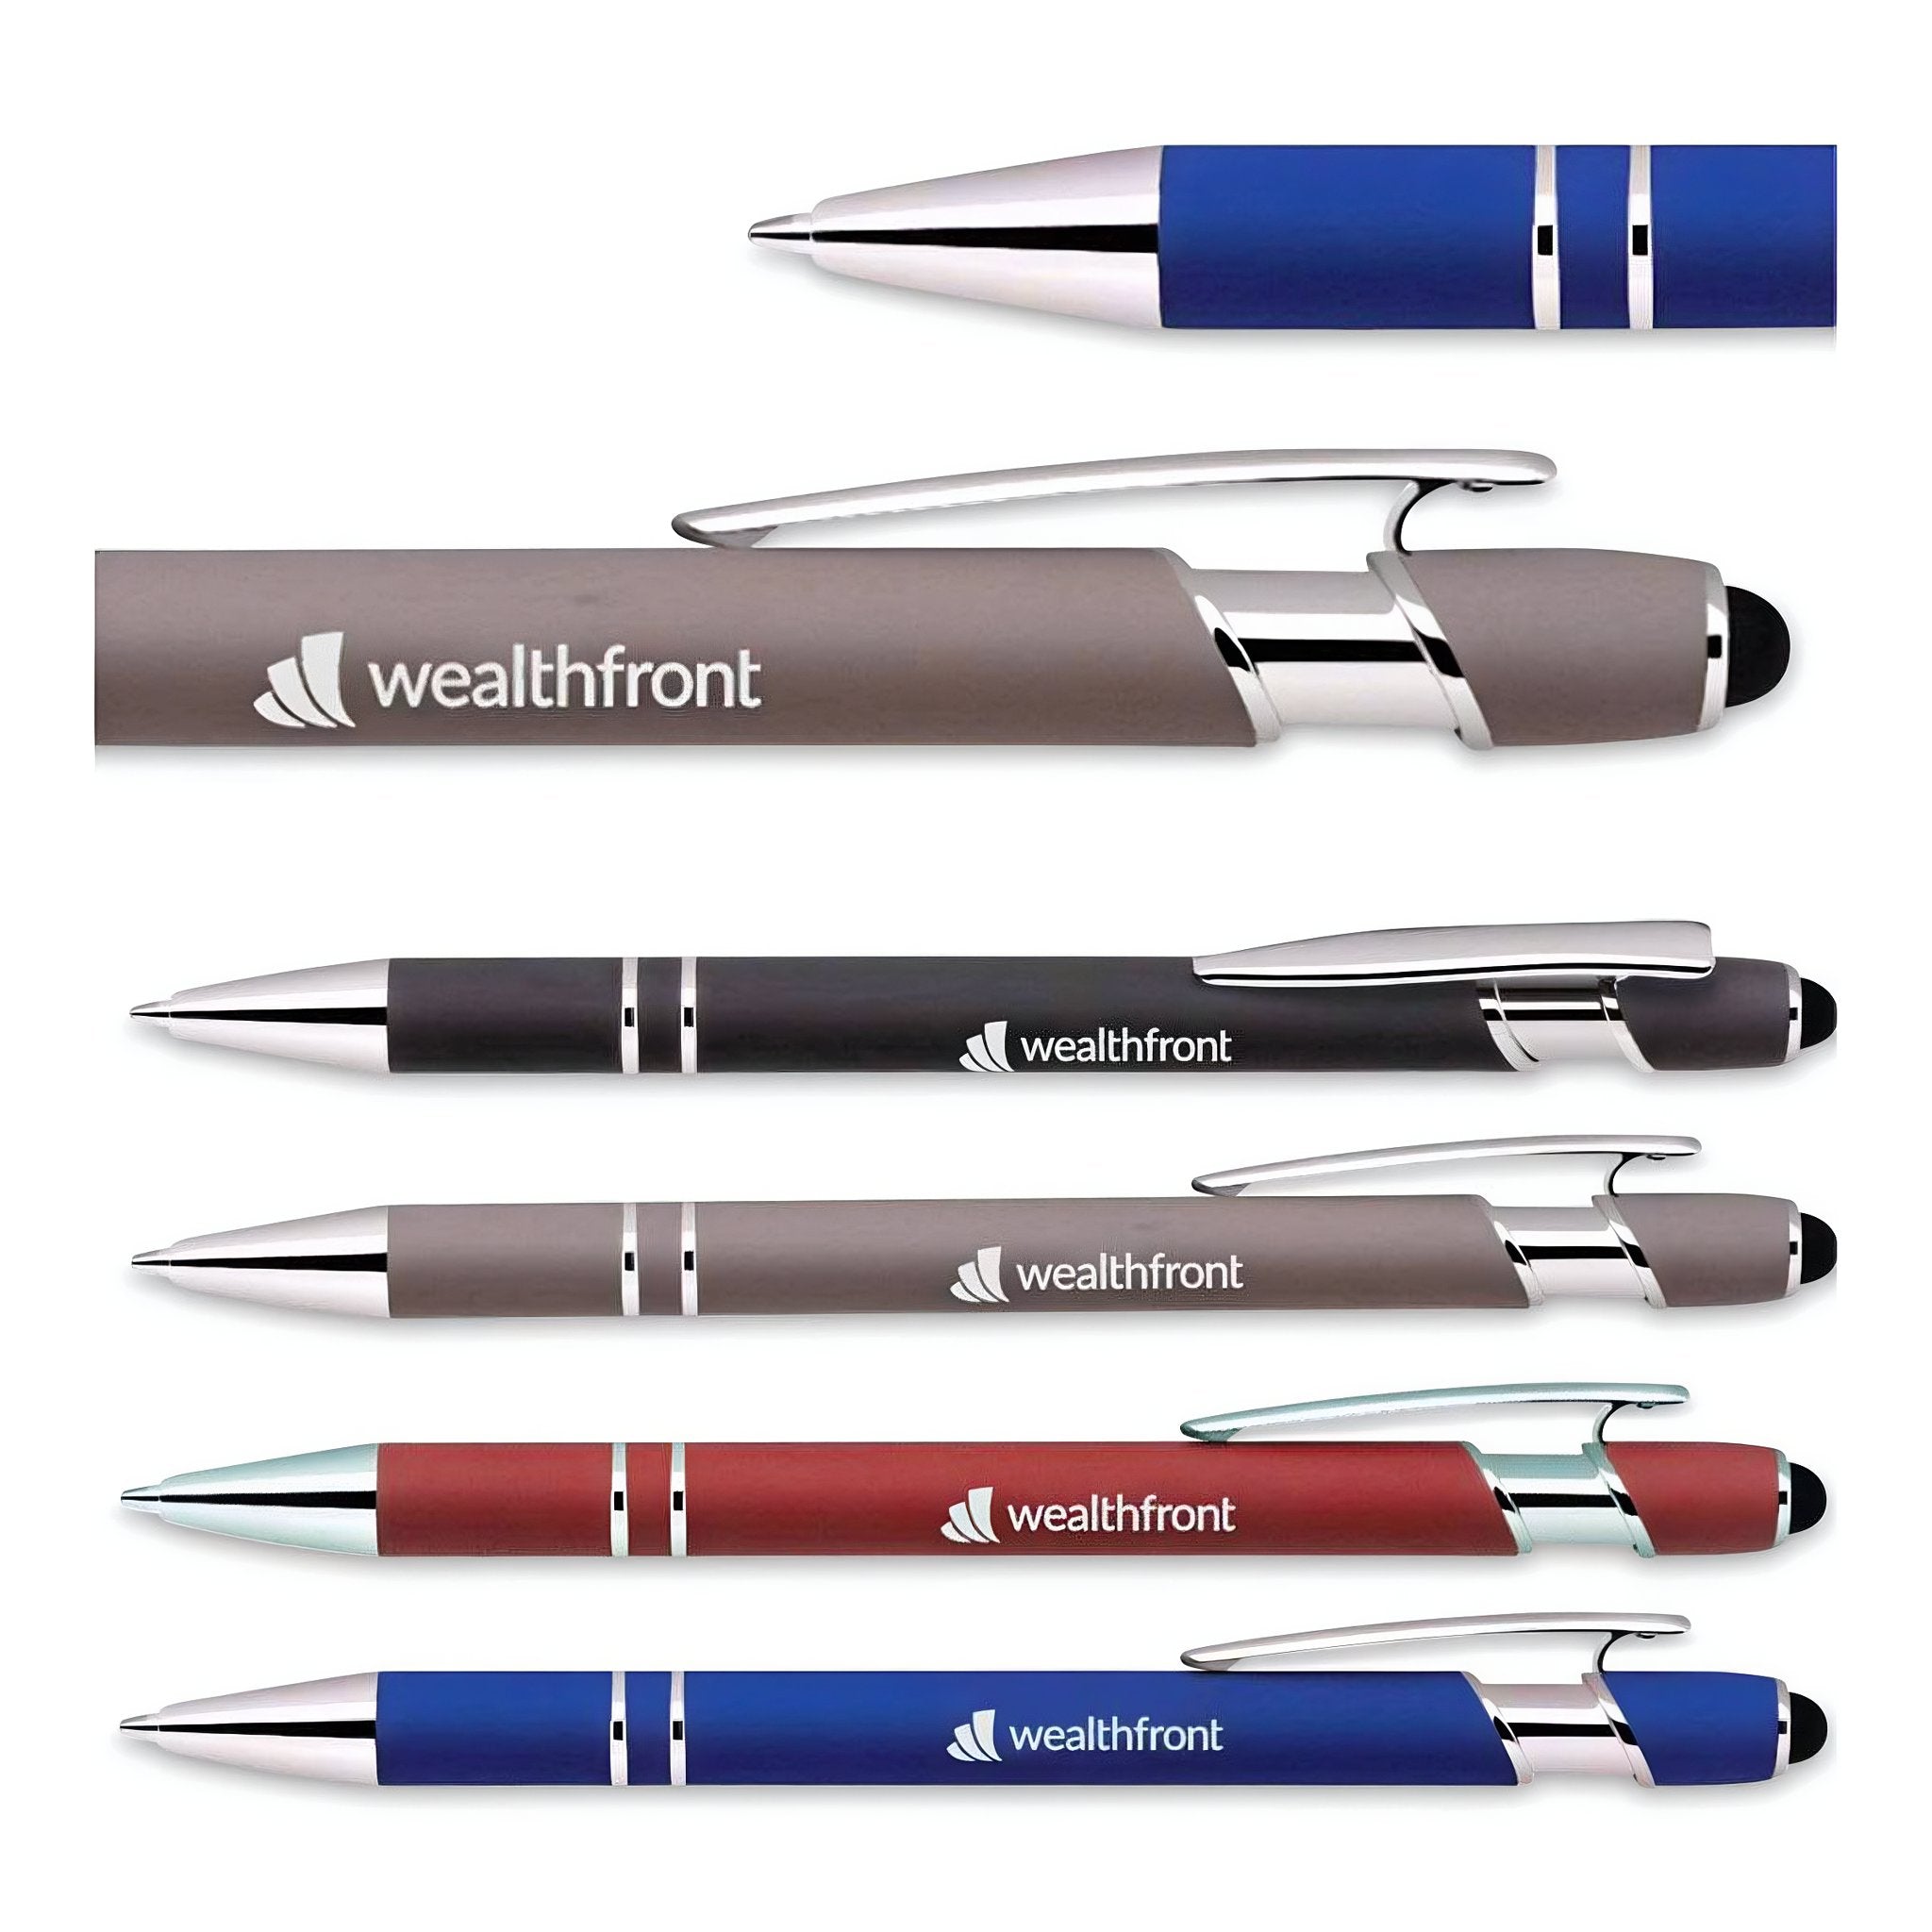 Full Color White Alpha Soft Touch Stylus Pen